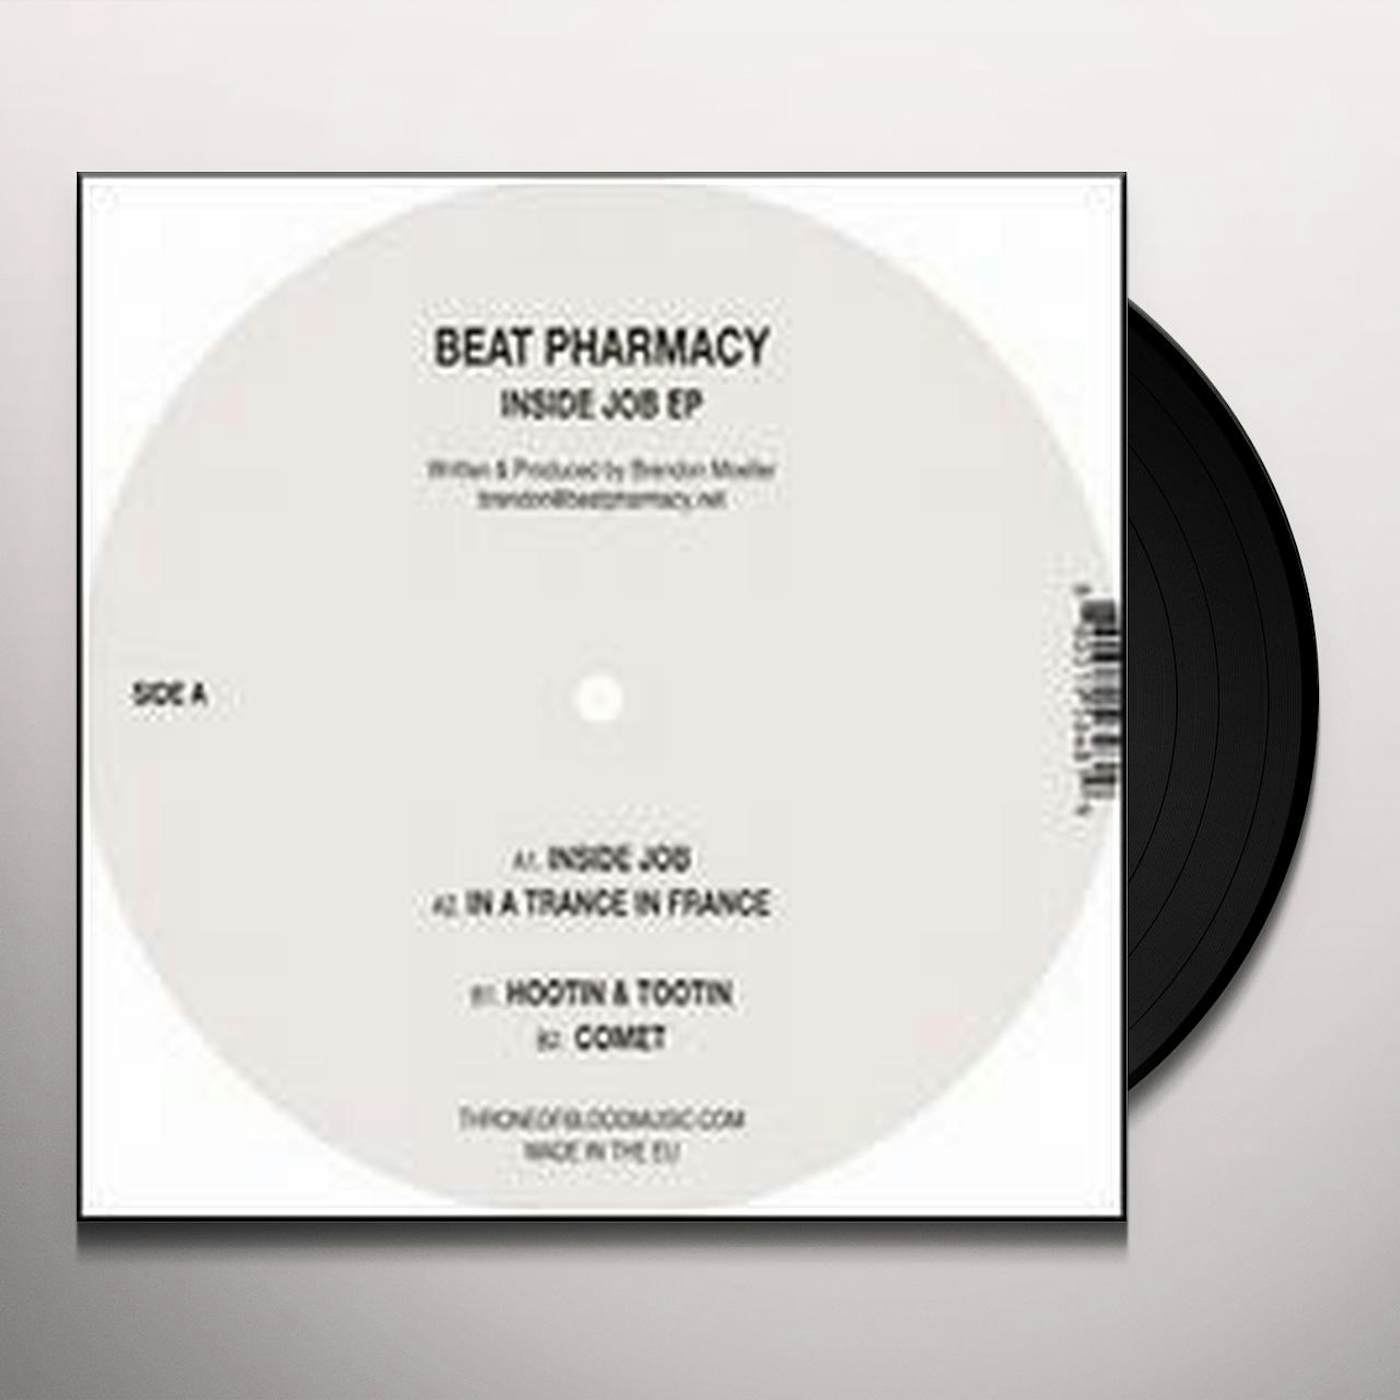 Beat Pharmacy INSIDE JOB (EP) Vinyl Record